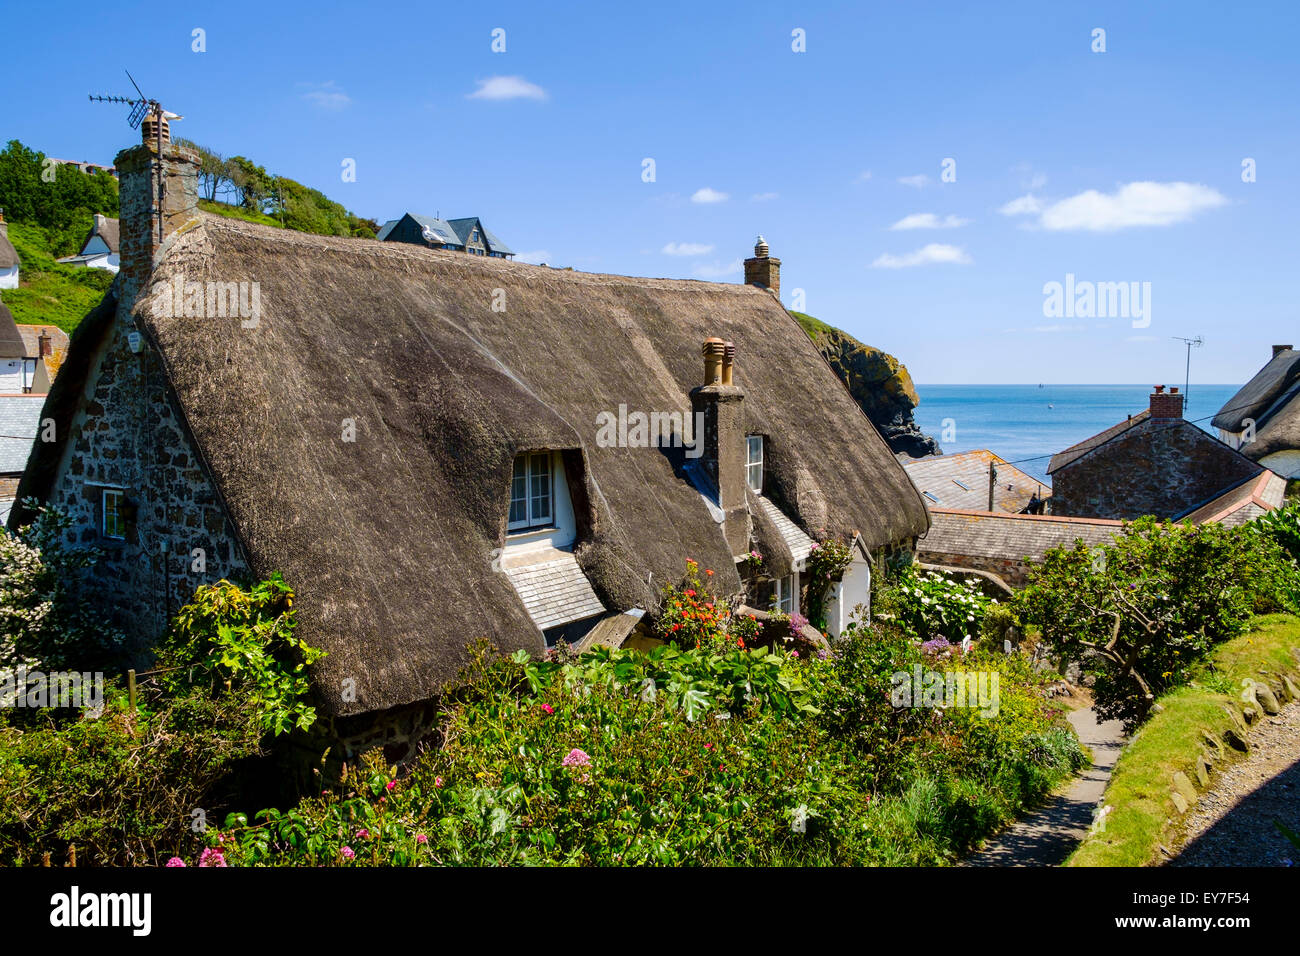 Reetdachhaus in winzigen Fischerdorf Dorf von Cadgwith, Halbinsel Lizard, Cornwall, England, UK Stockfoto